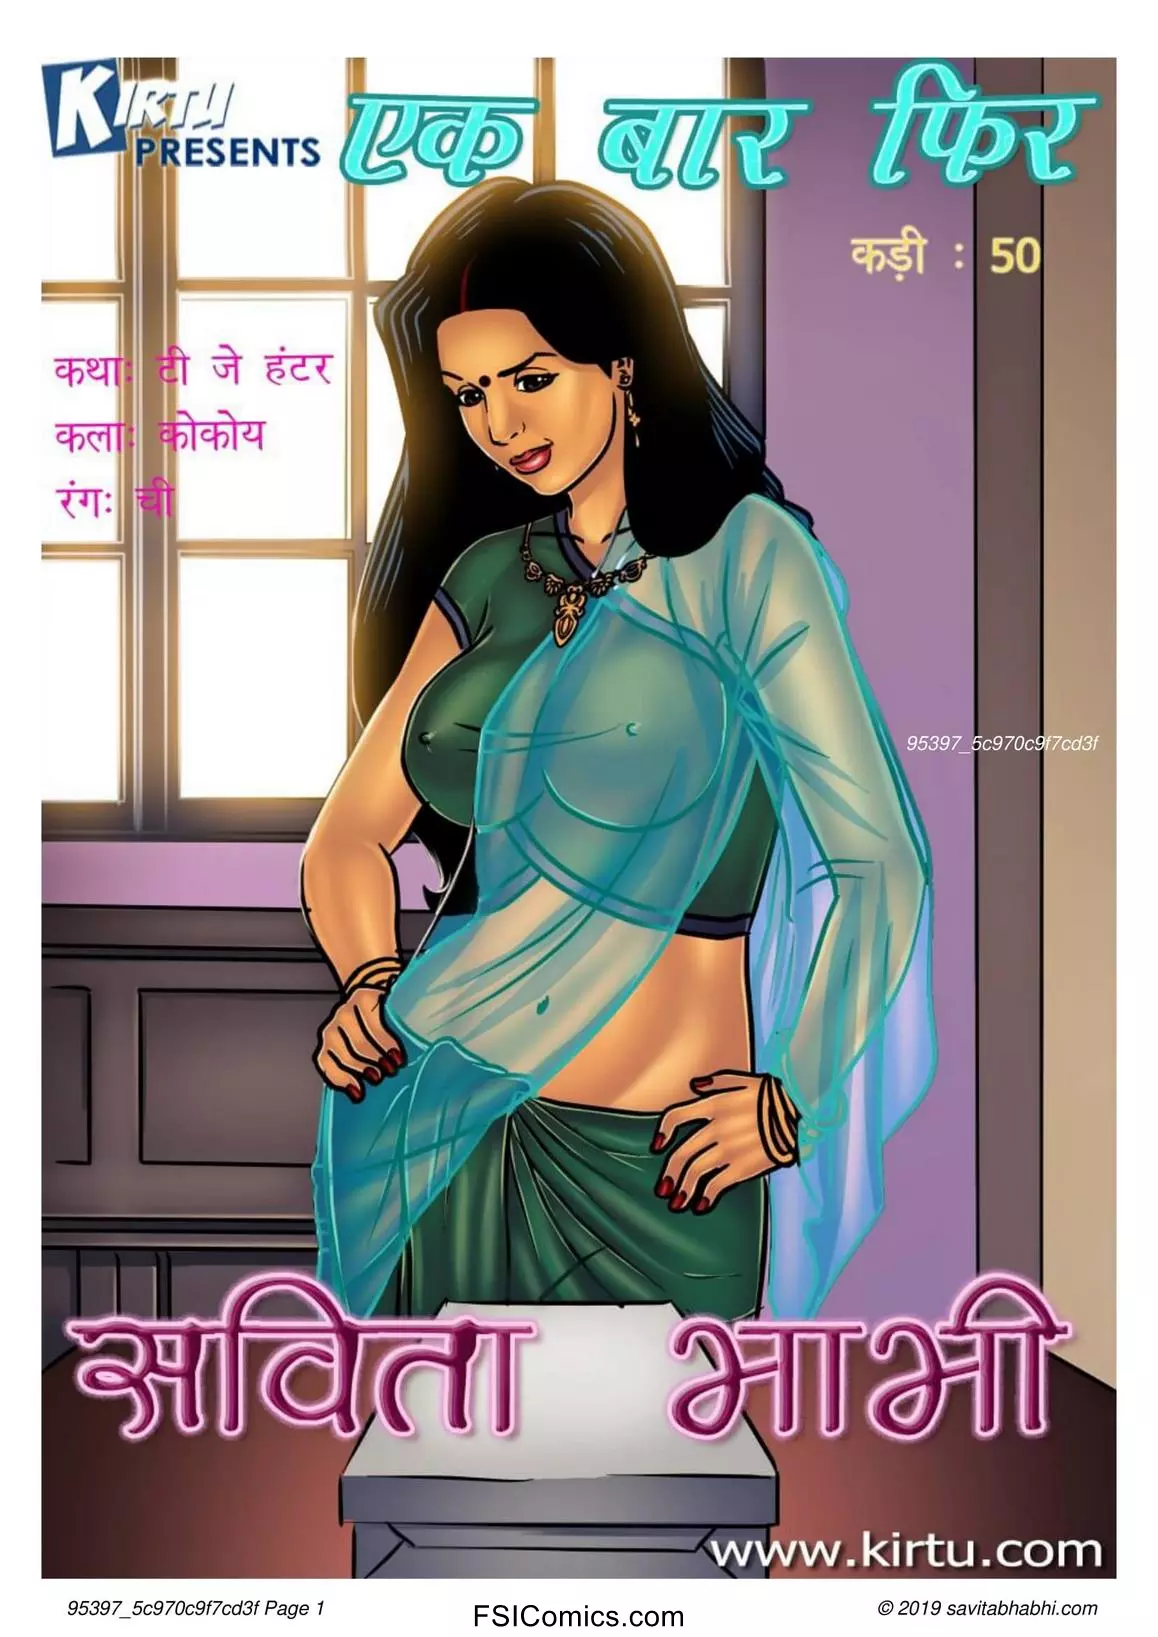 Xxx Hd Video Savita Bhabhi Superman Hindi Mein - Savita Bhabhi Episode 50 Hindi â€“ Ek Baar Phir (à¤à¤• à¤¬à¤¾à¤° à¤«à¤¿à¤°) - FSIComics